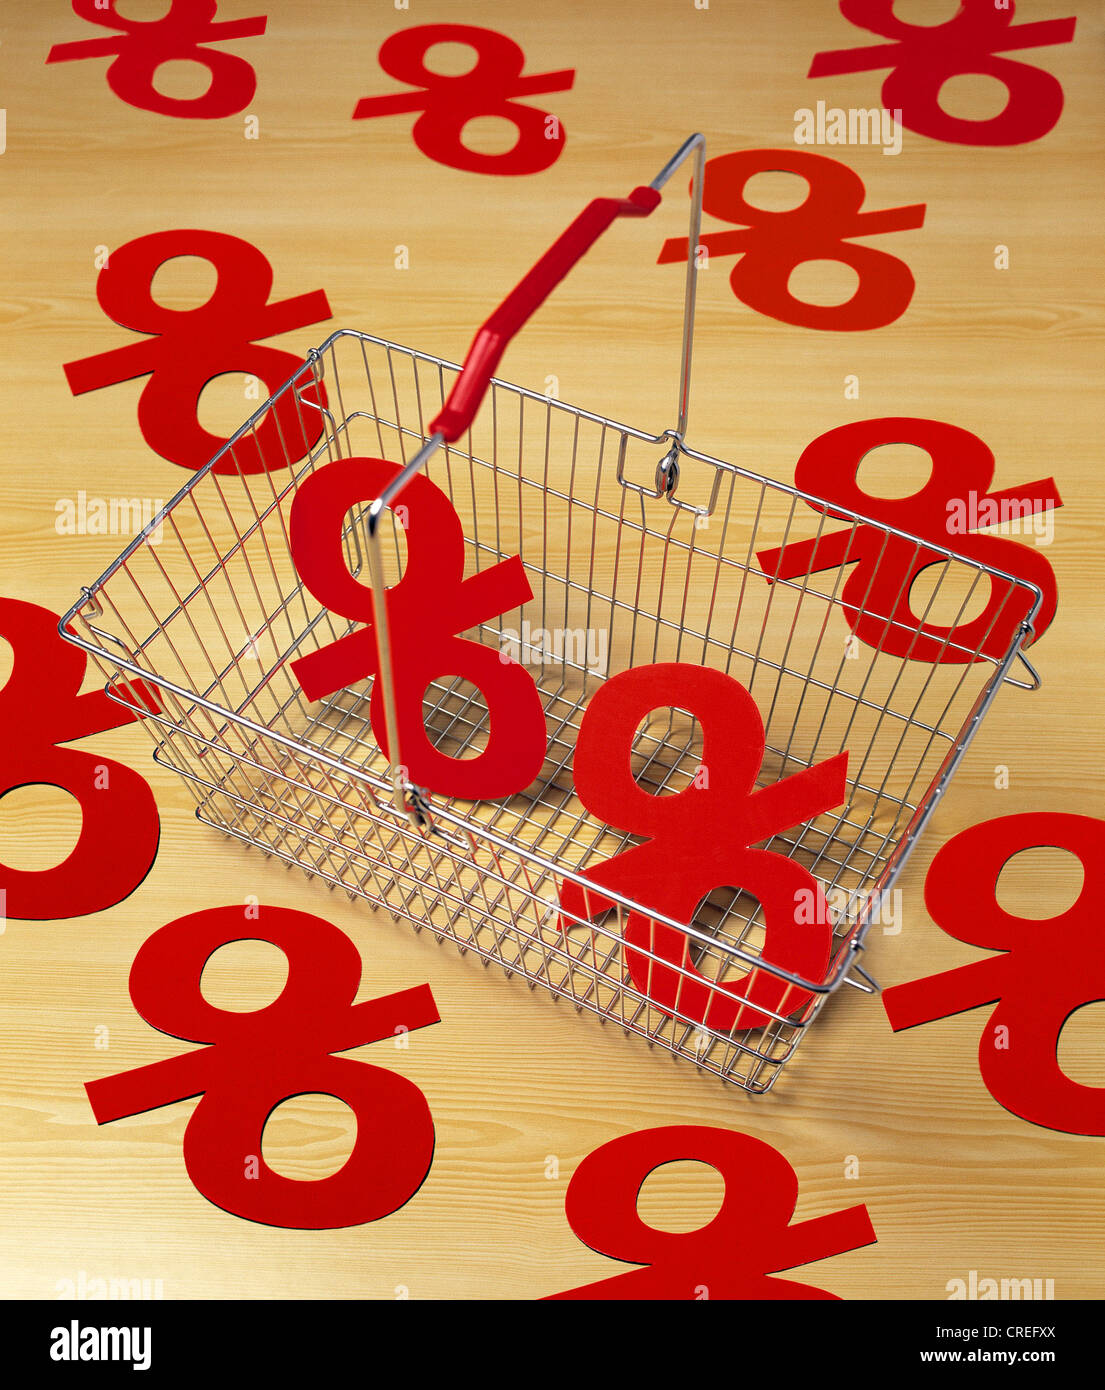 Basket with percent symbols Stock Photo